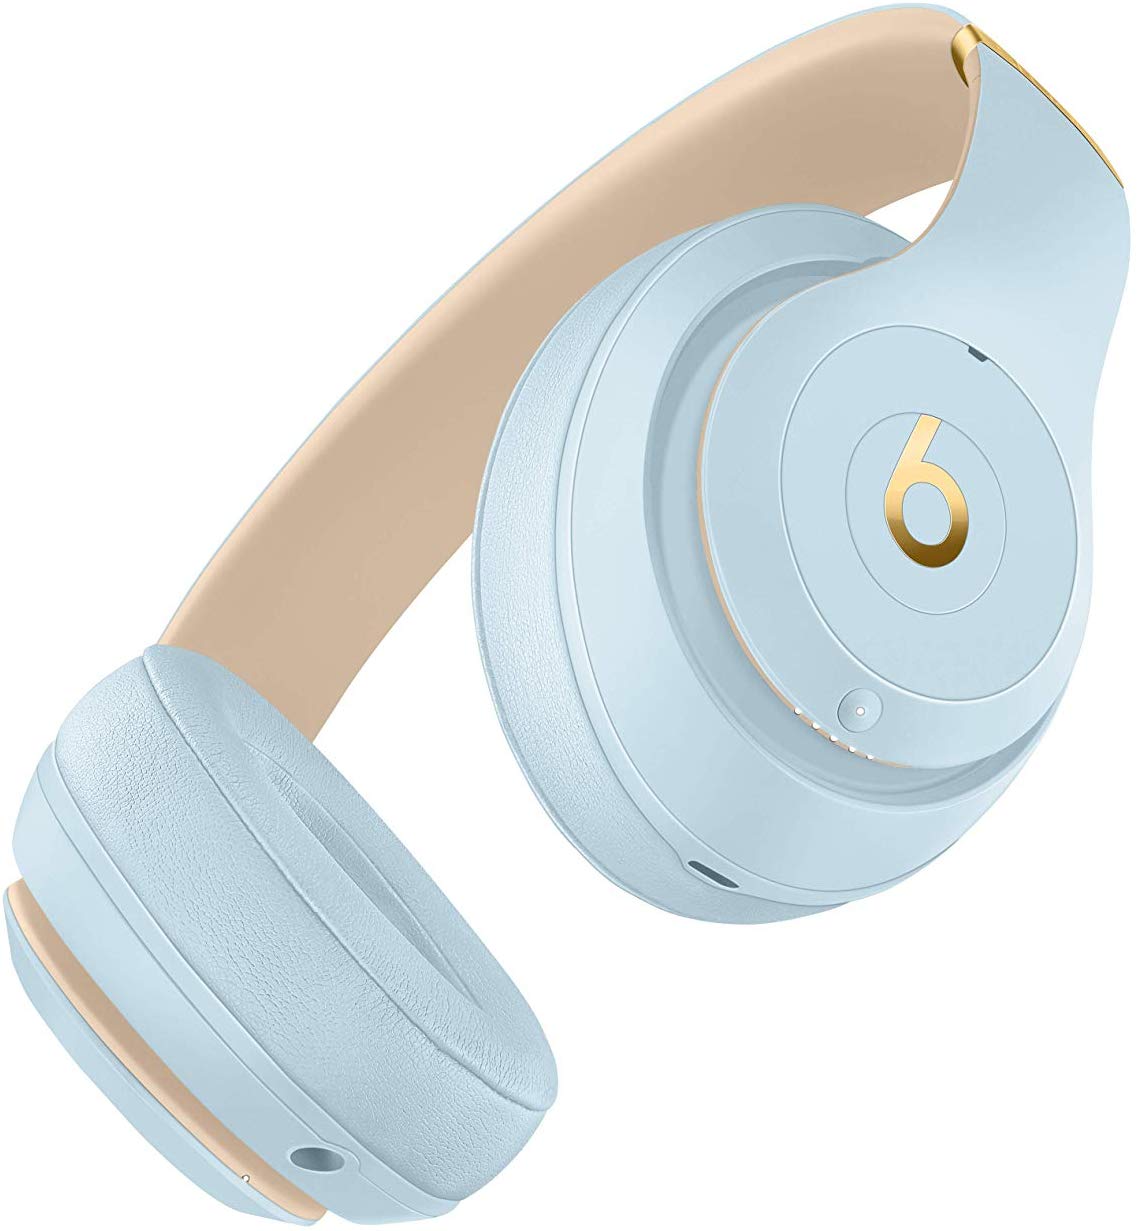 Beats Studio3 Wireless Headphones On Sale for 43% Off [Lowest Price Ever]